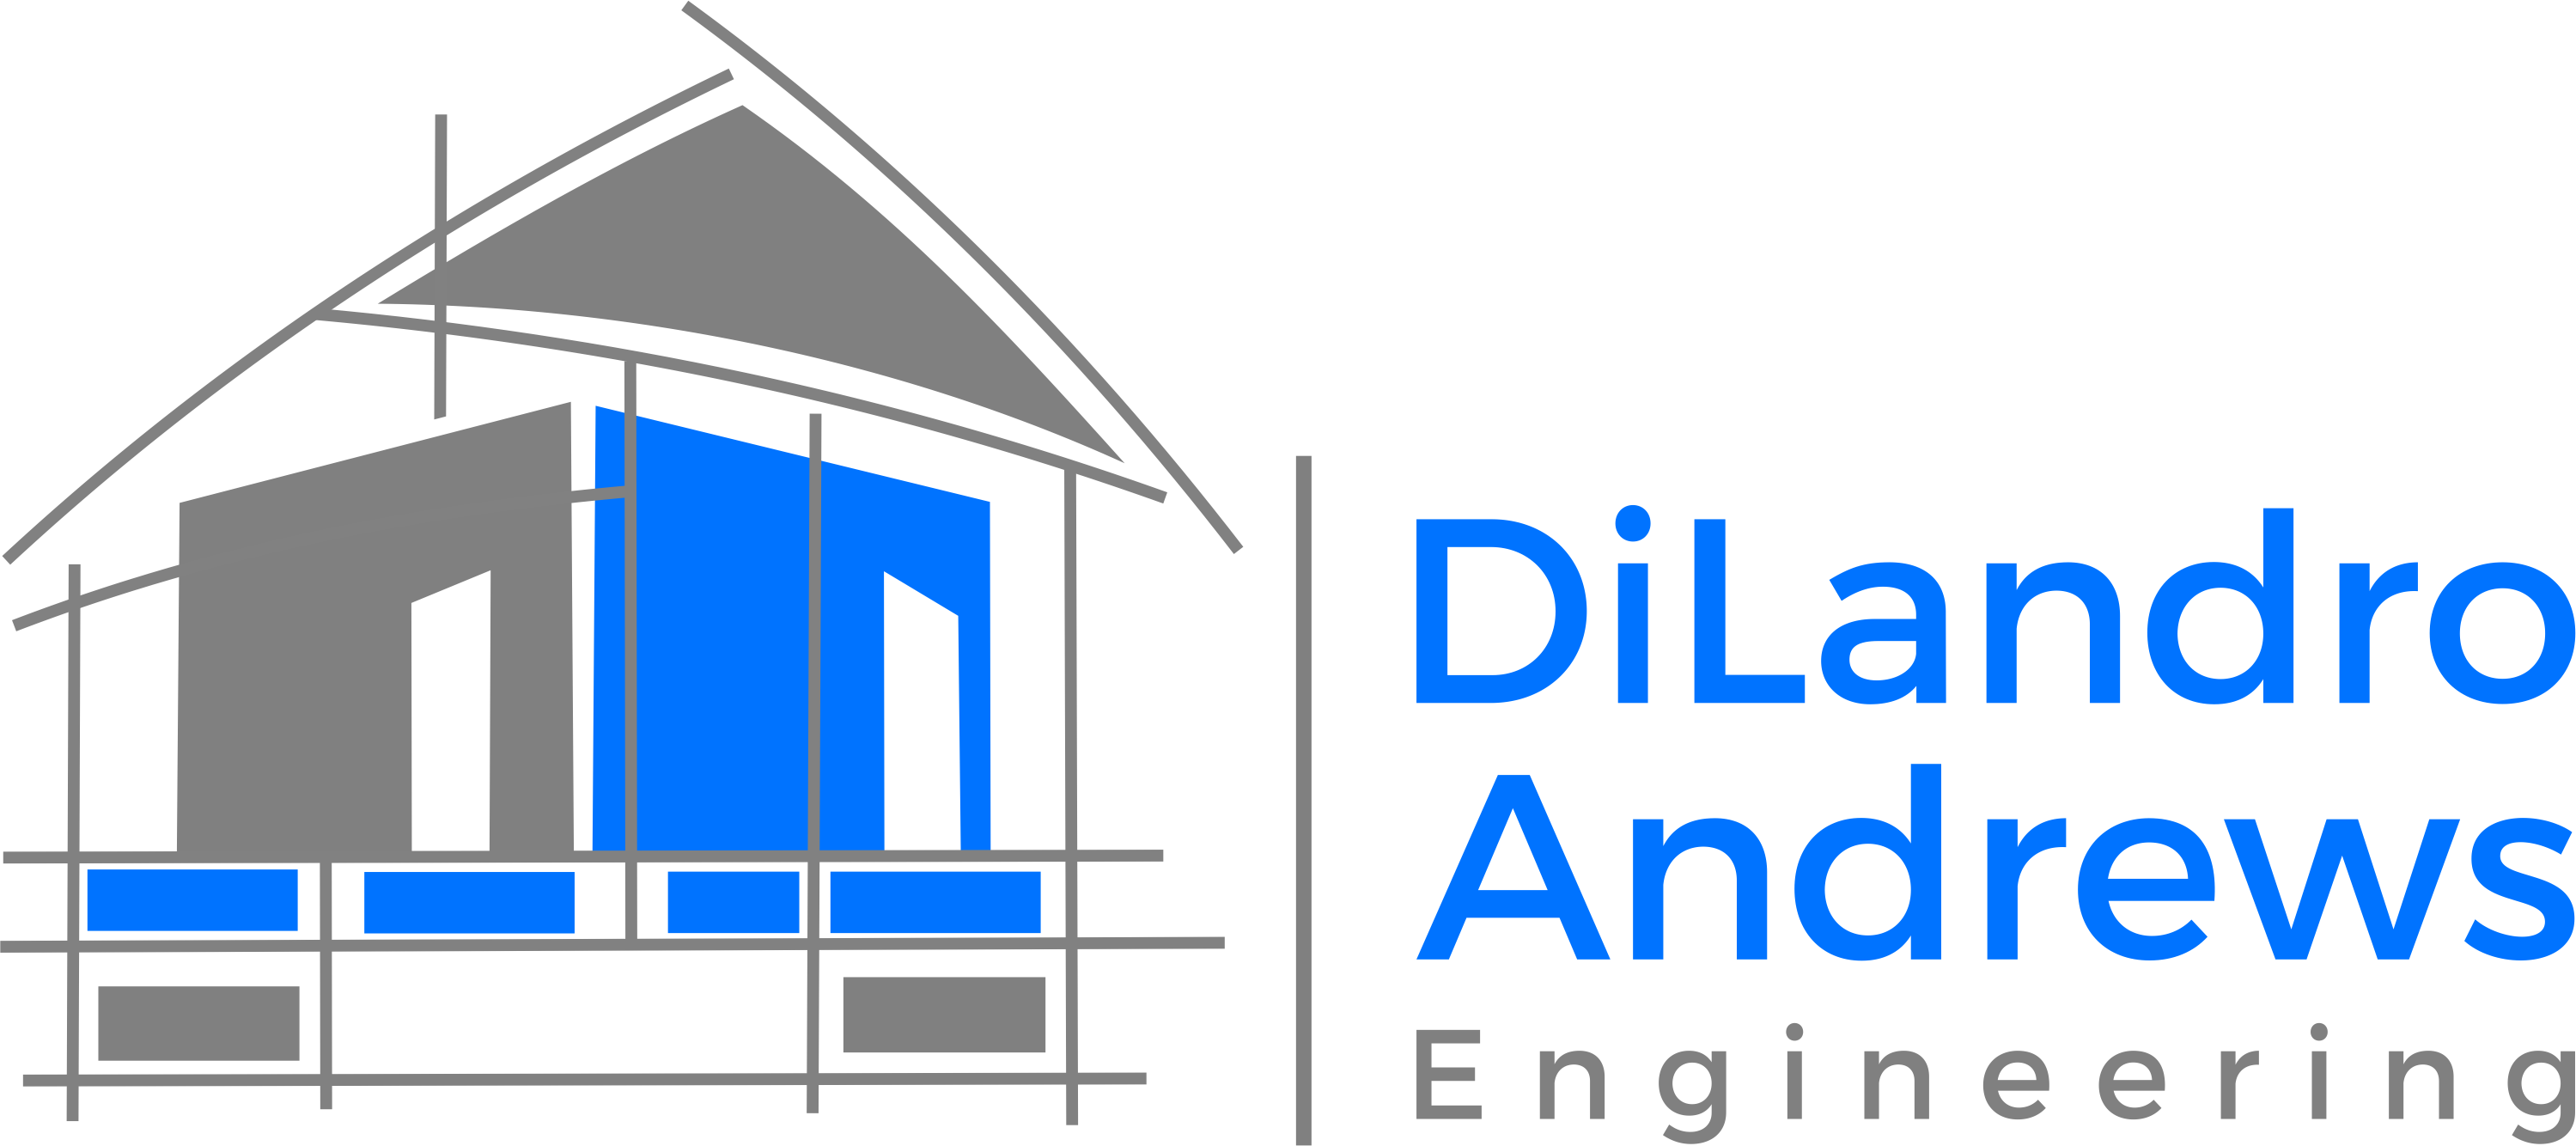 dilandro andrews engineering logo